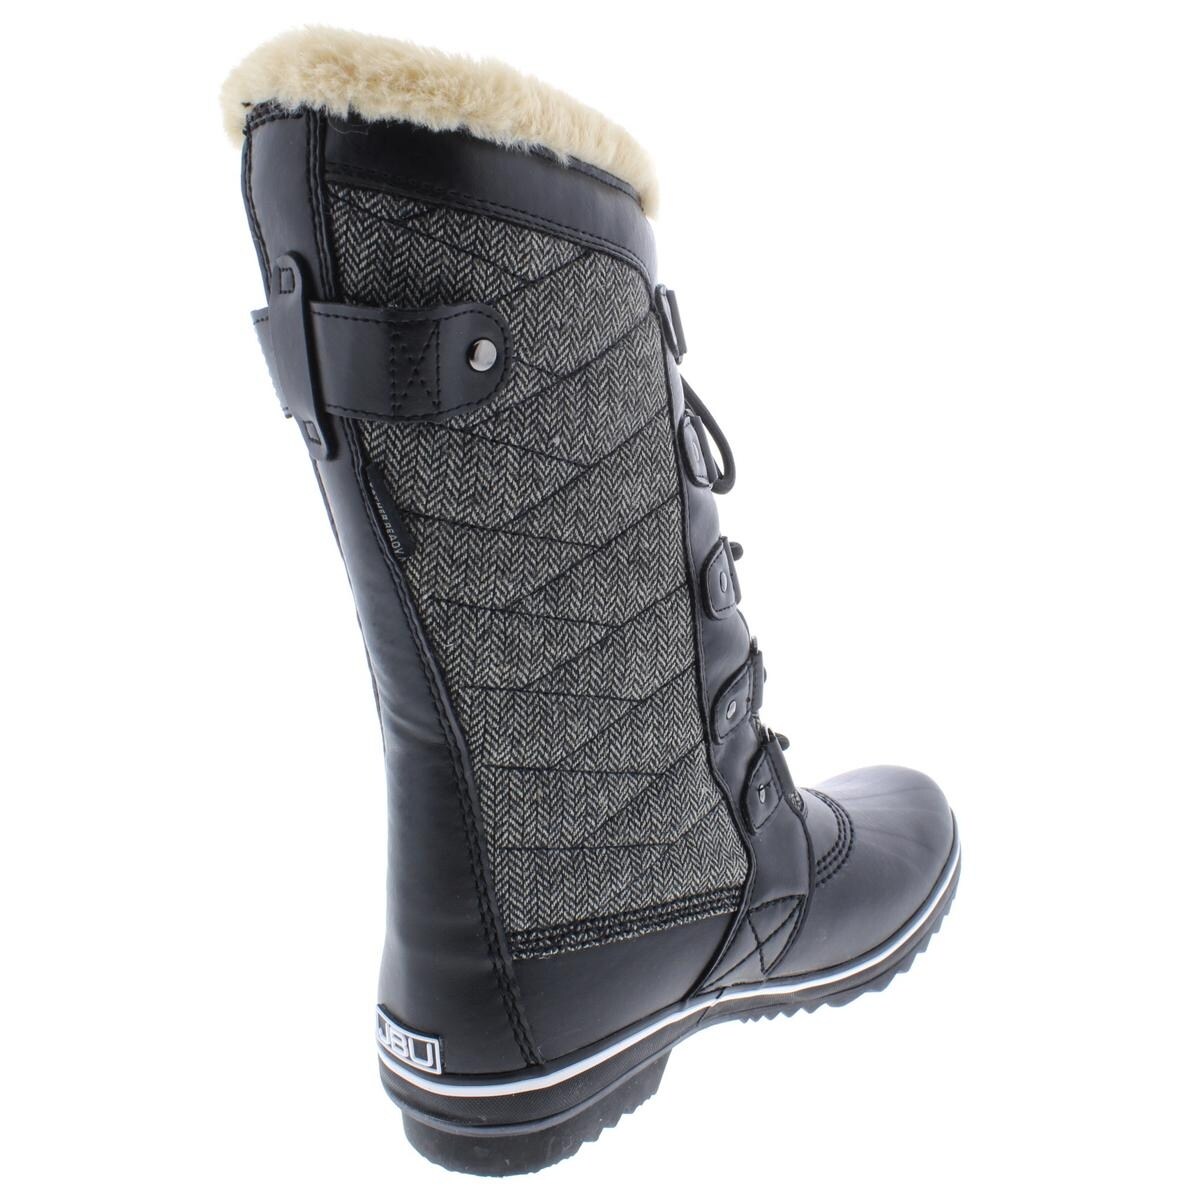 jambu lorna cold weather boots